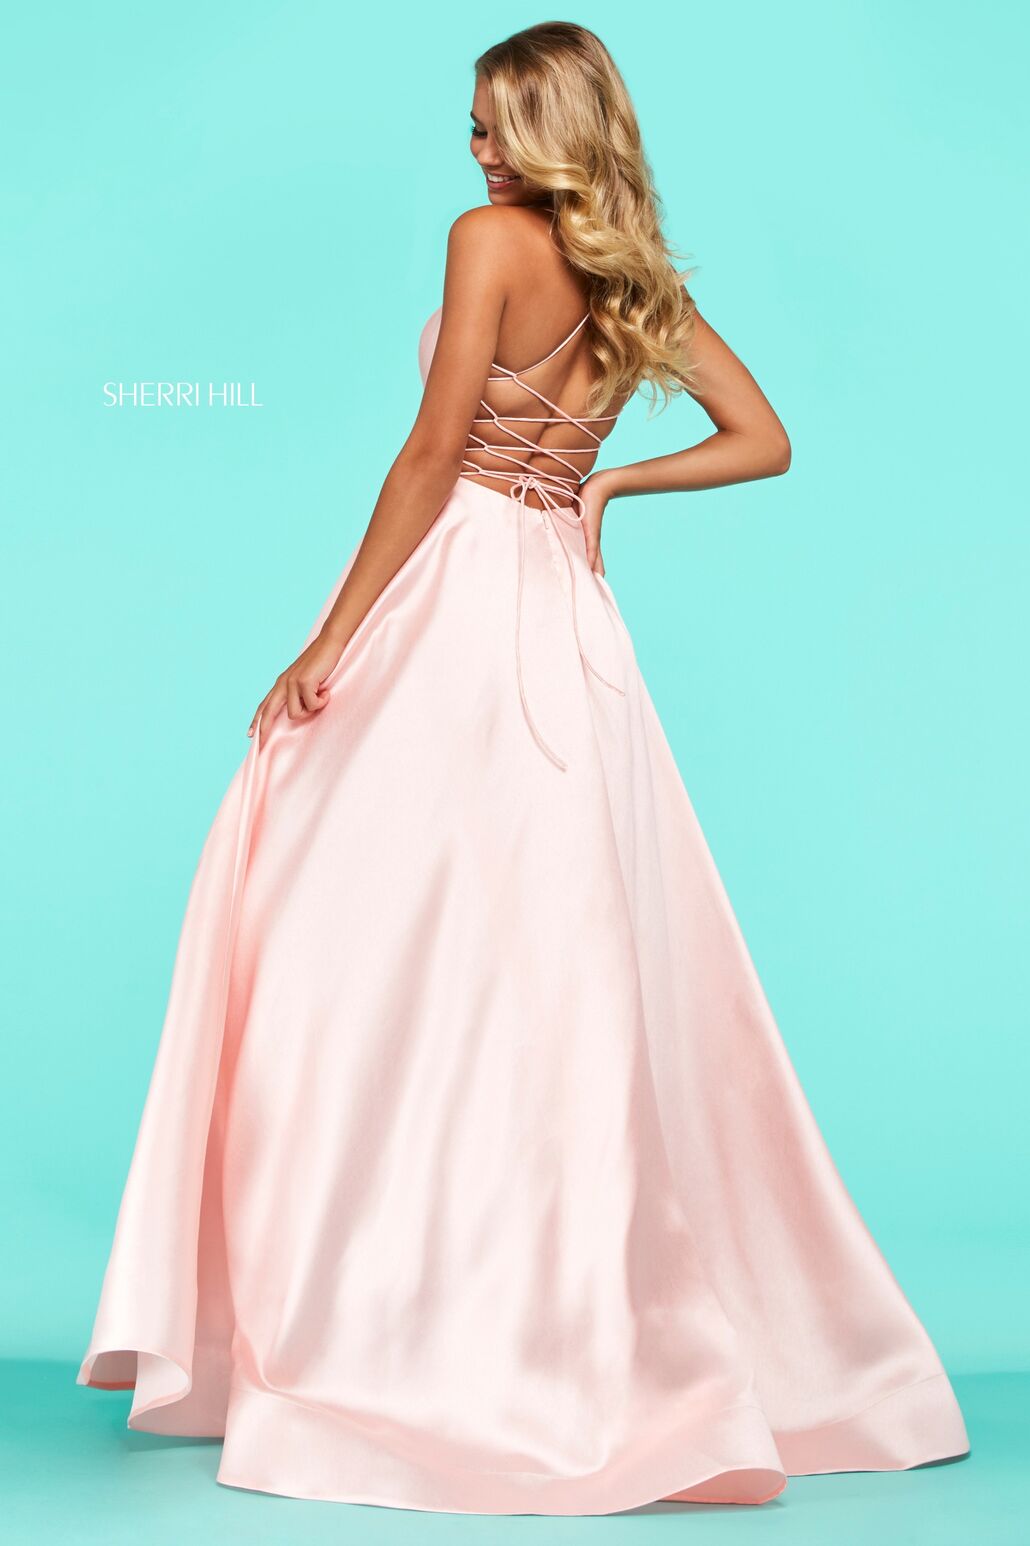 53661 Prom Dress Aqua, Yellow, Coral, Pink